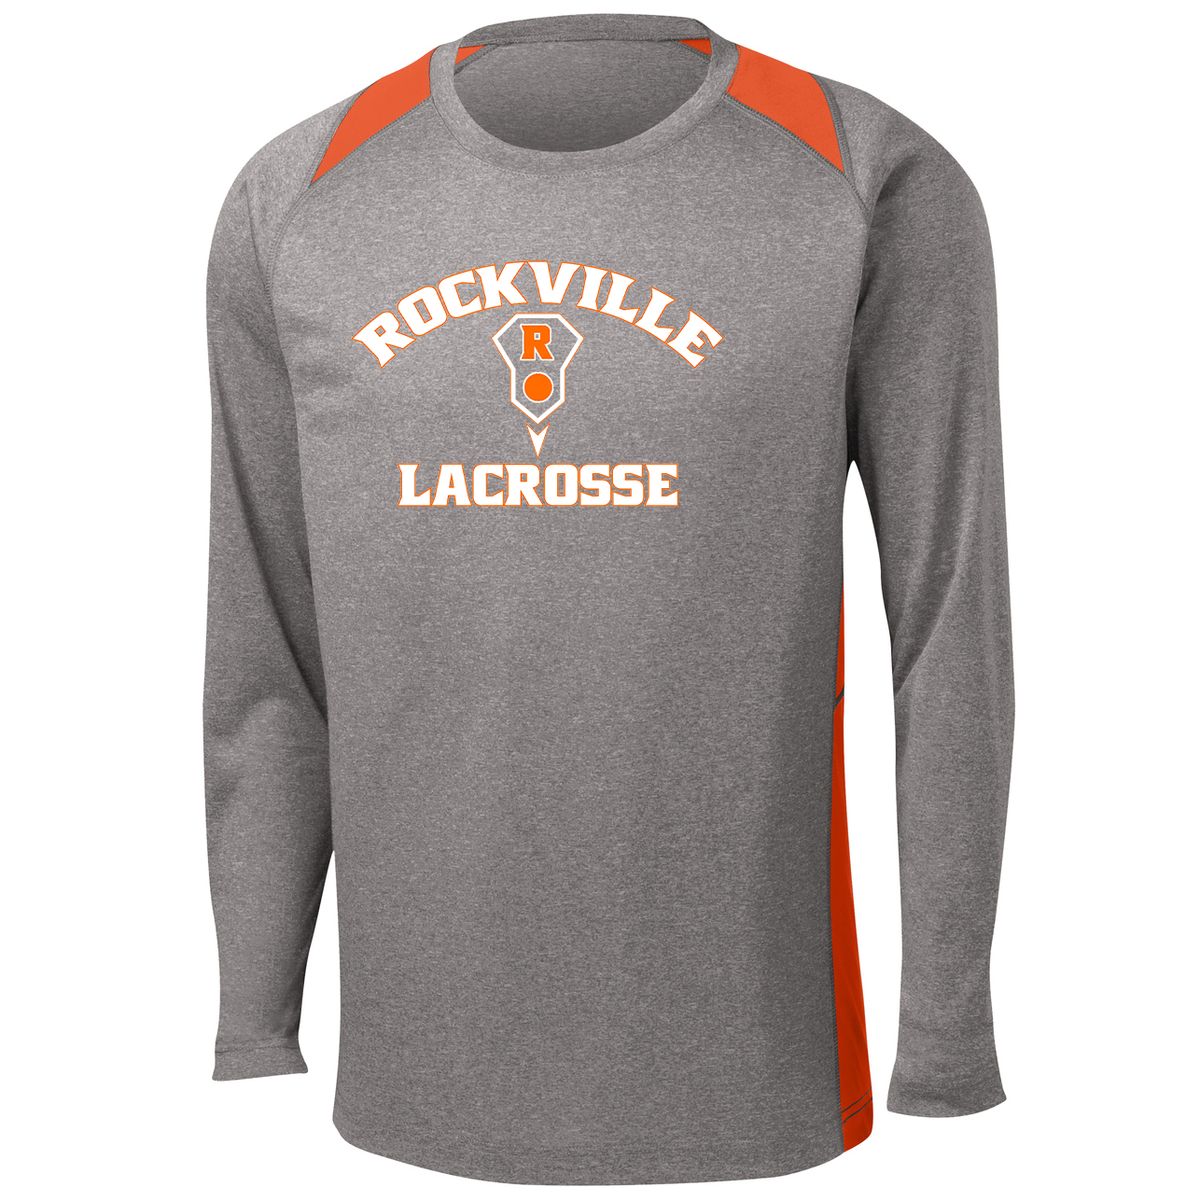 Rockville HS Girls Lacrosse LS Colorblock Contender Tee